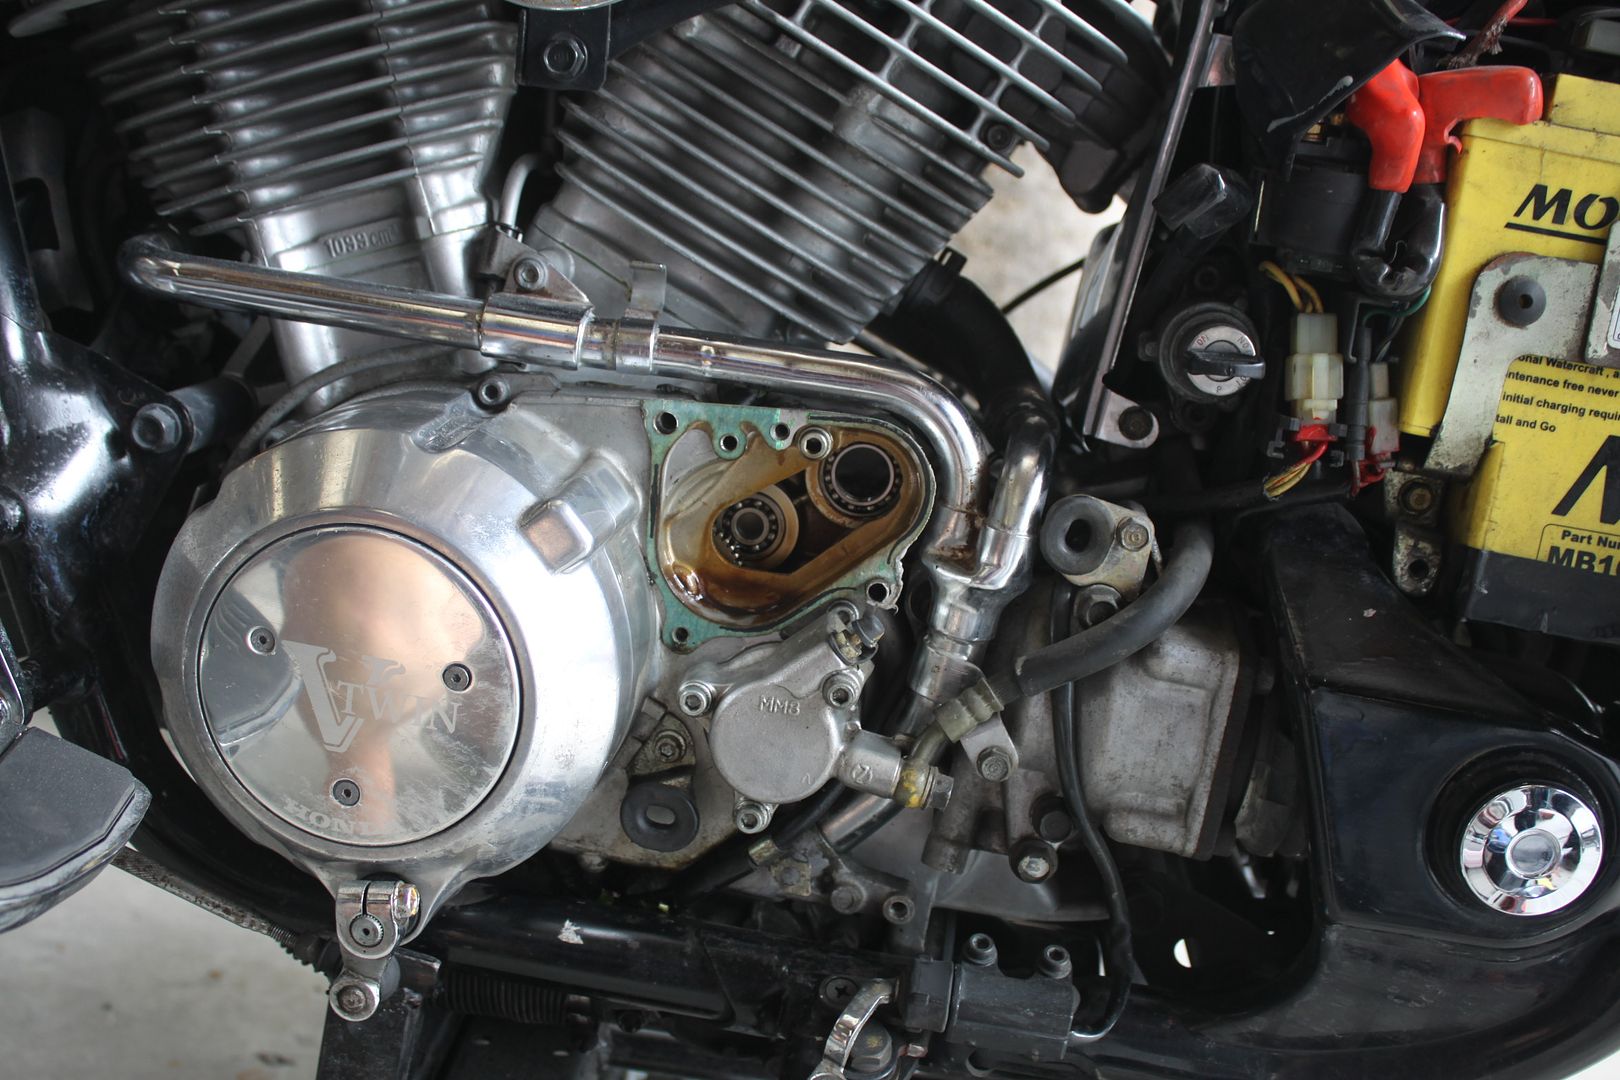 Honda shadow motorcycle overfill oil leak #6